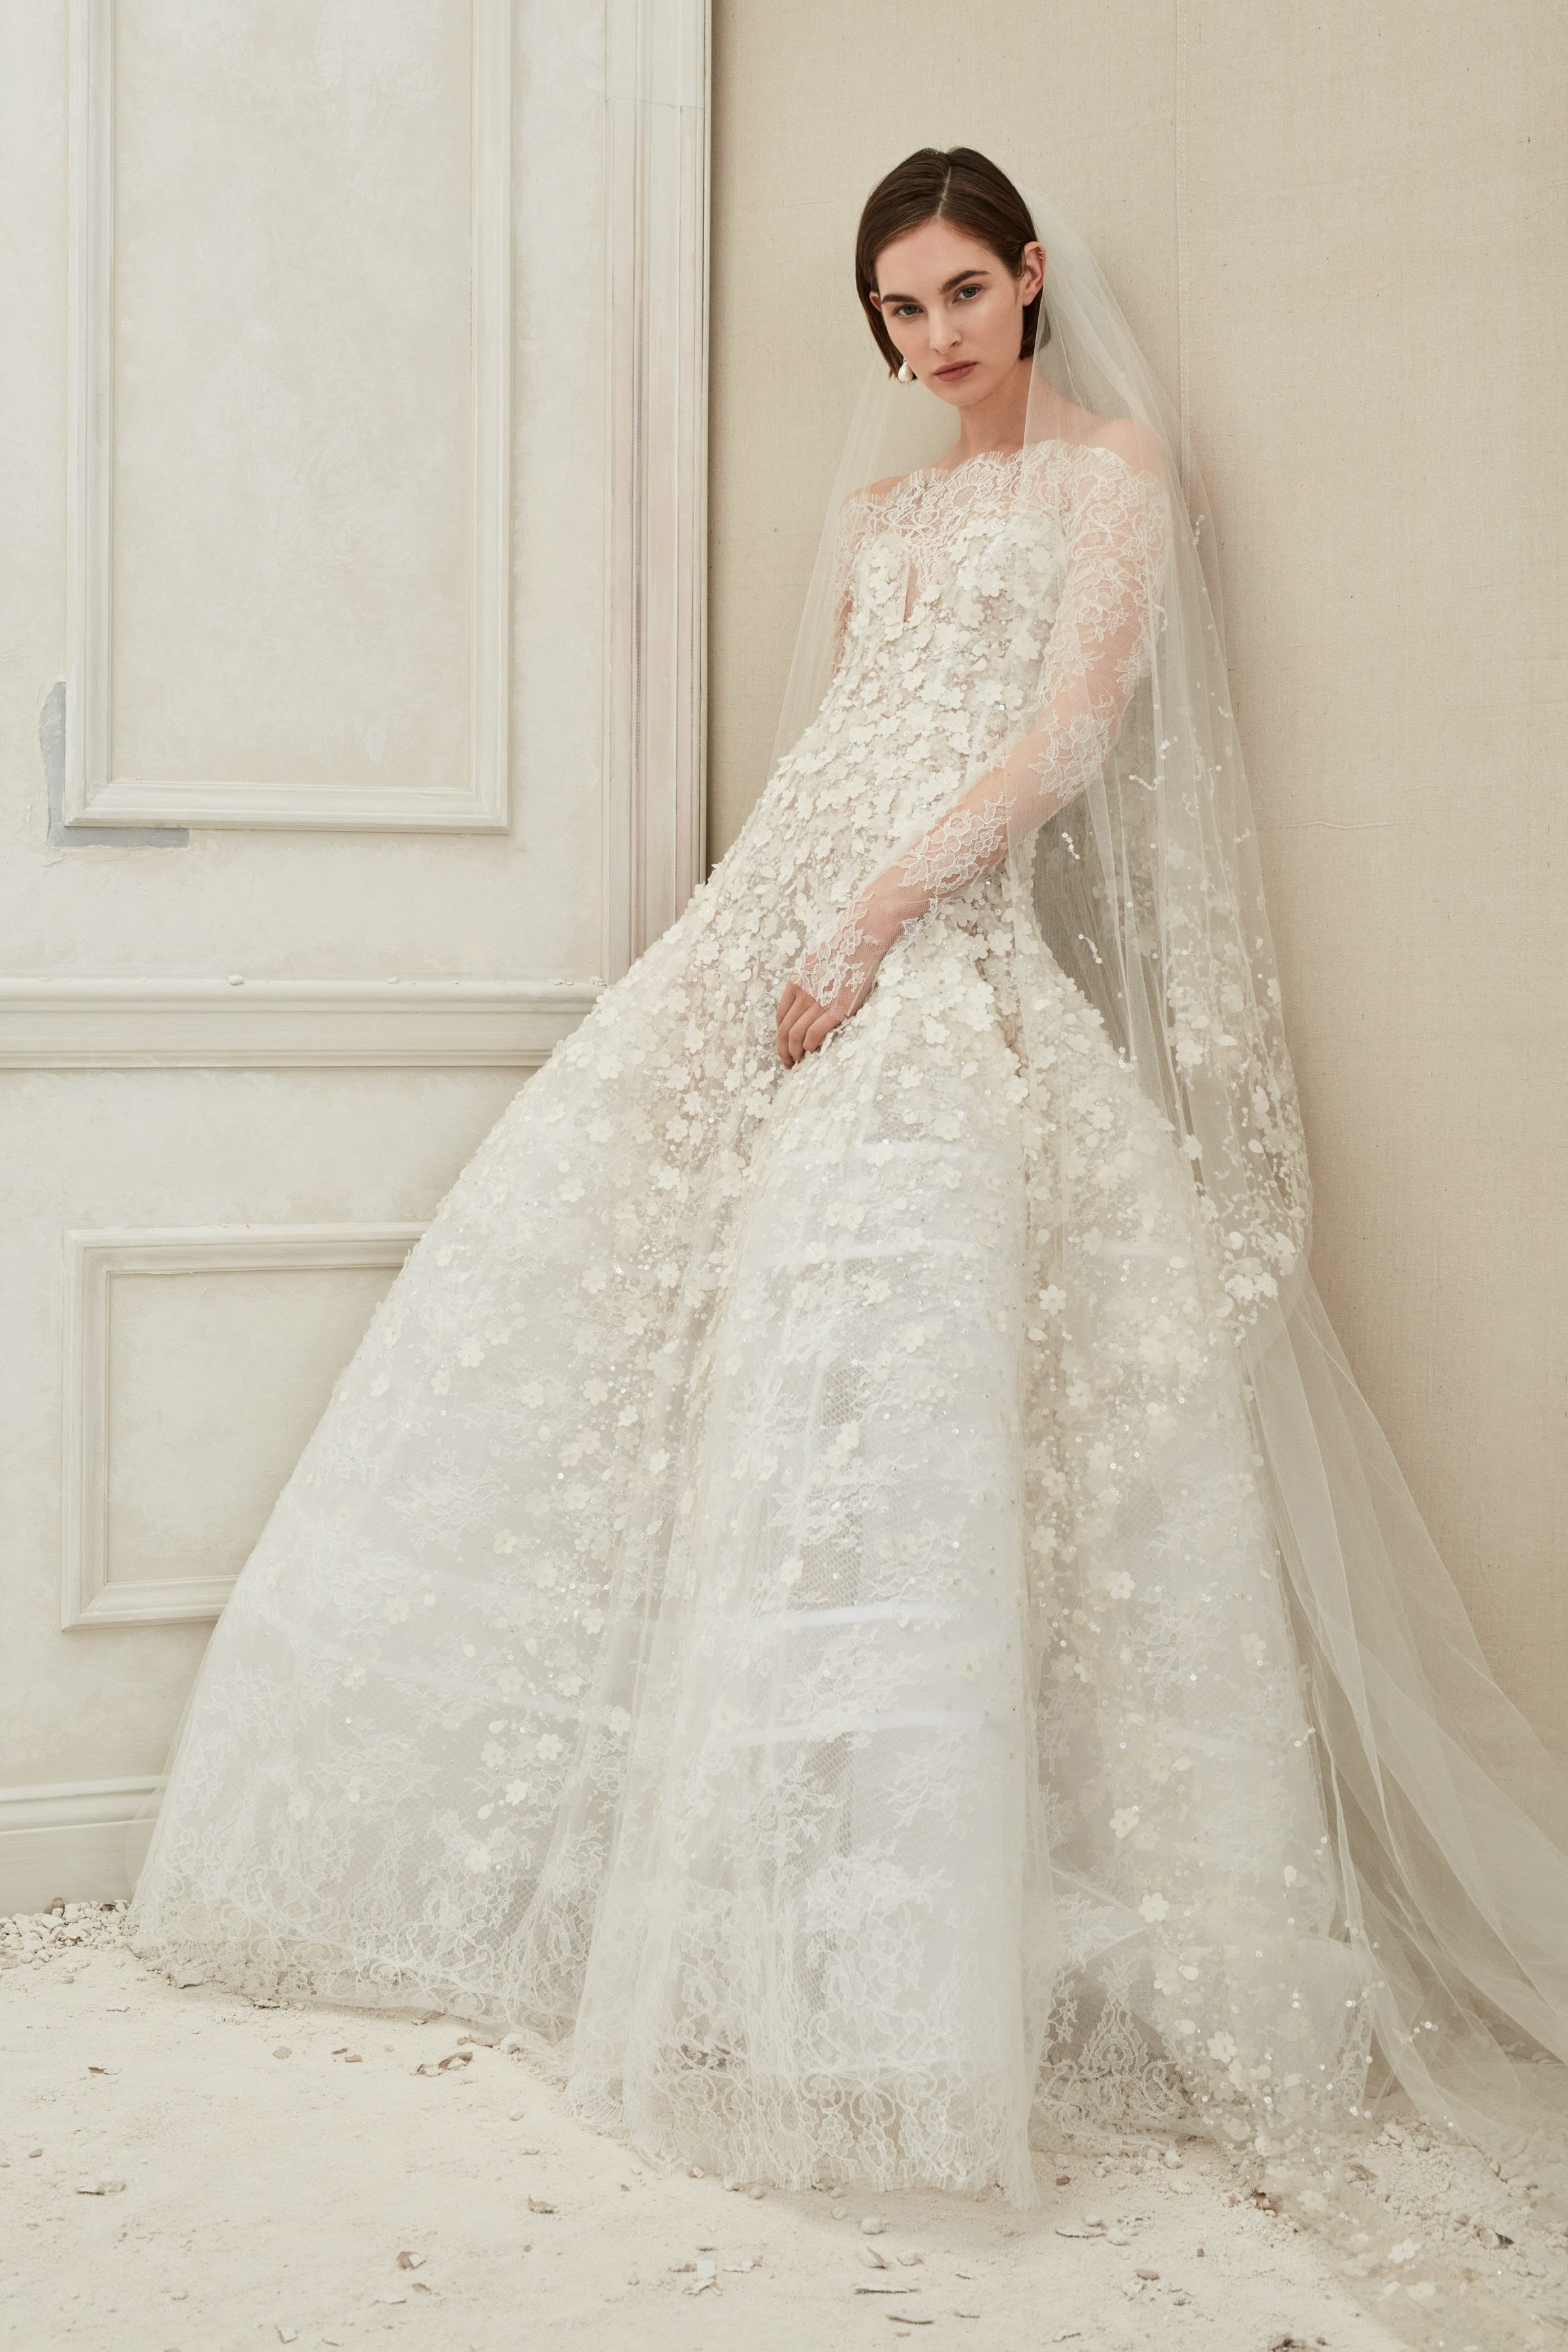 Oscar De La Renta S Latest Bridal Collection Is Simply Stunning Image Ie